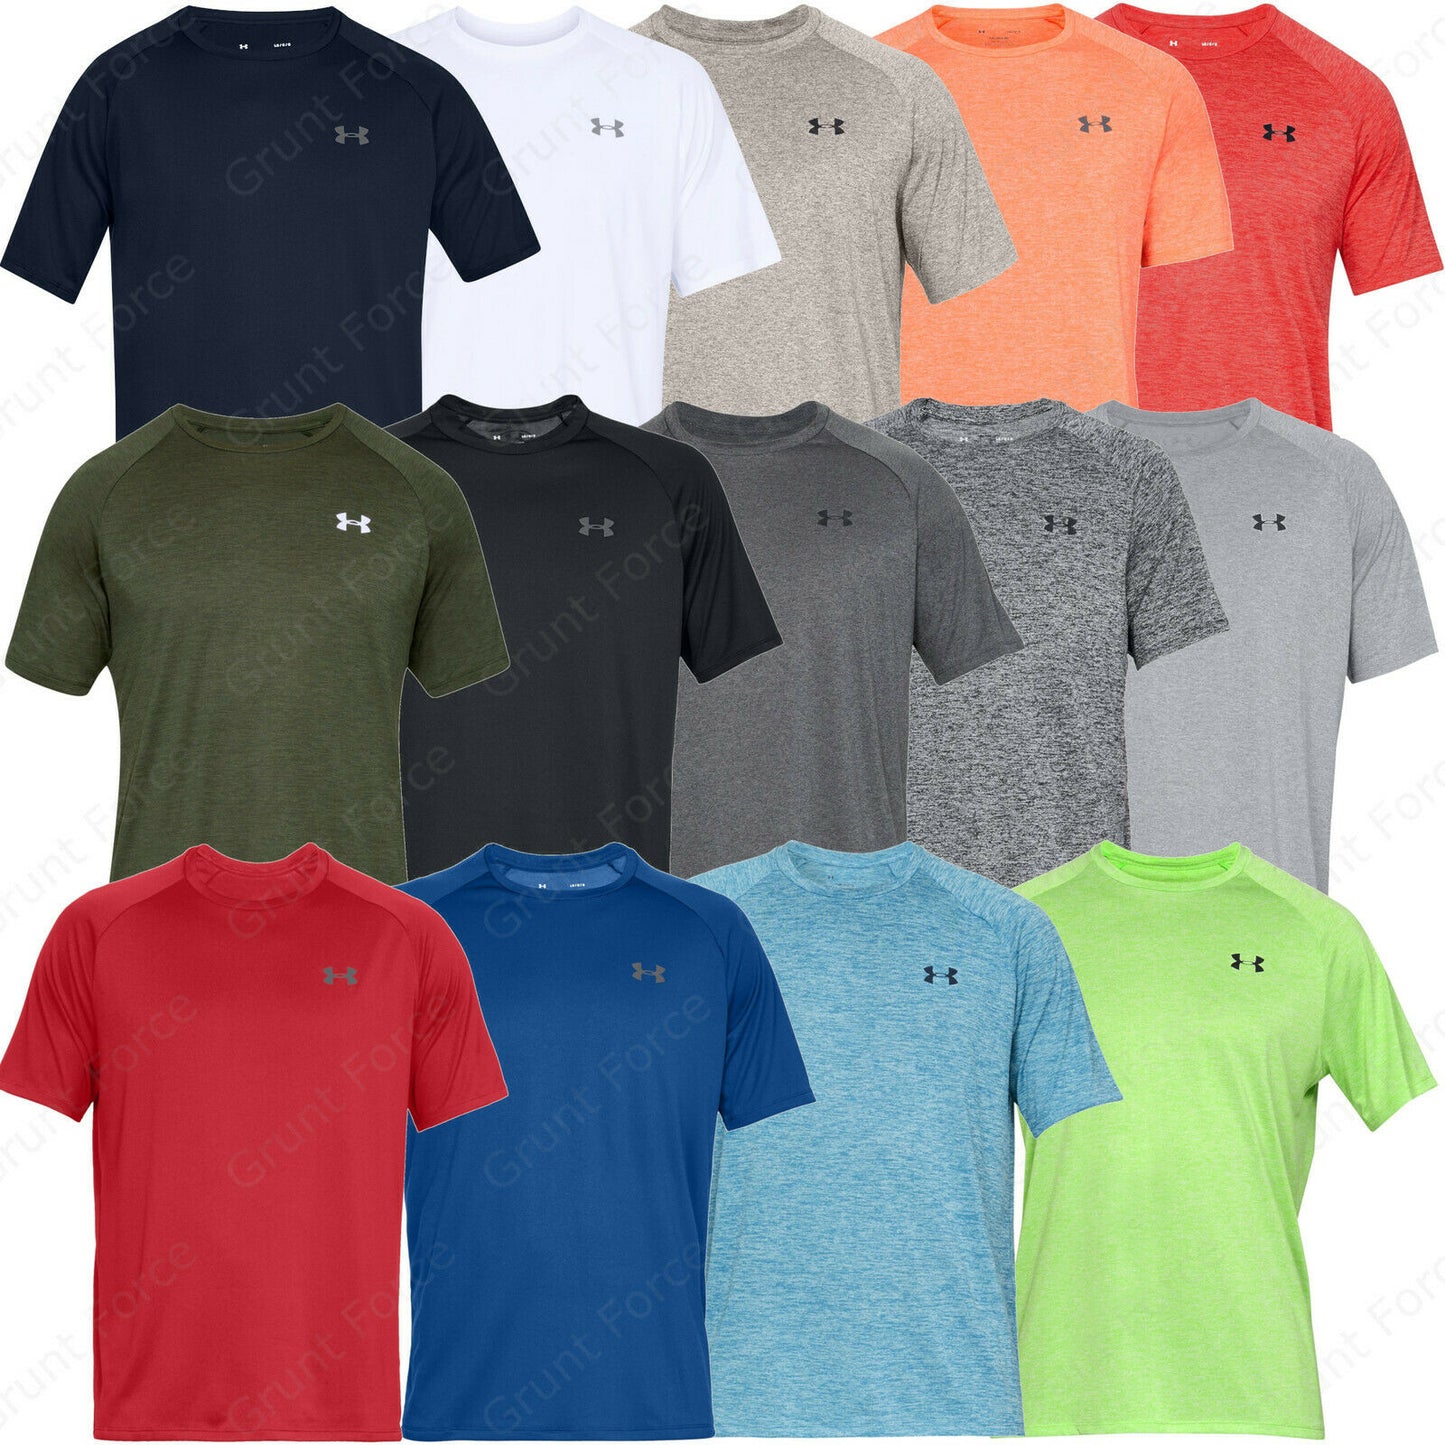 Under Armour Men’s Short Sleeve T-Shirt - UA Tech 2.0 Athletic Shirts